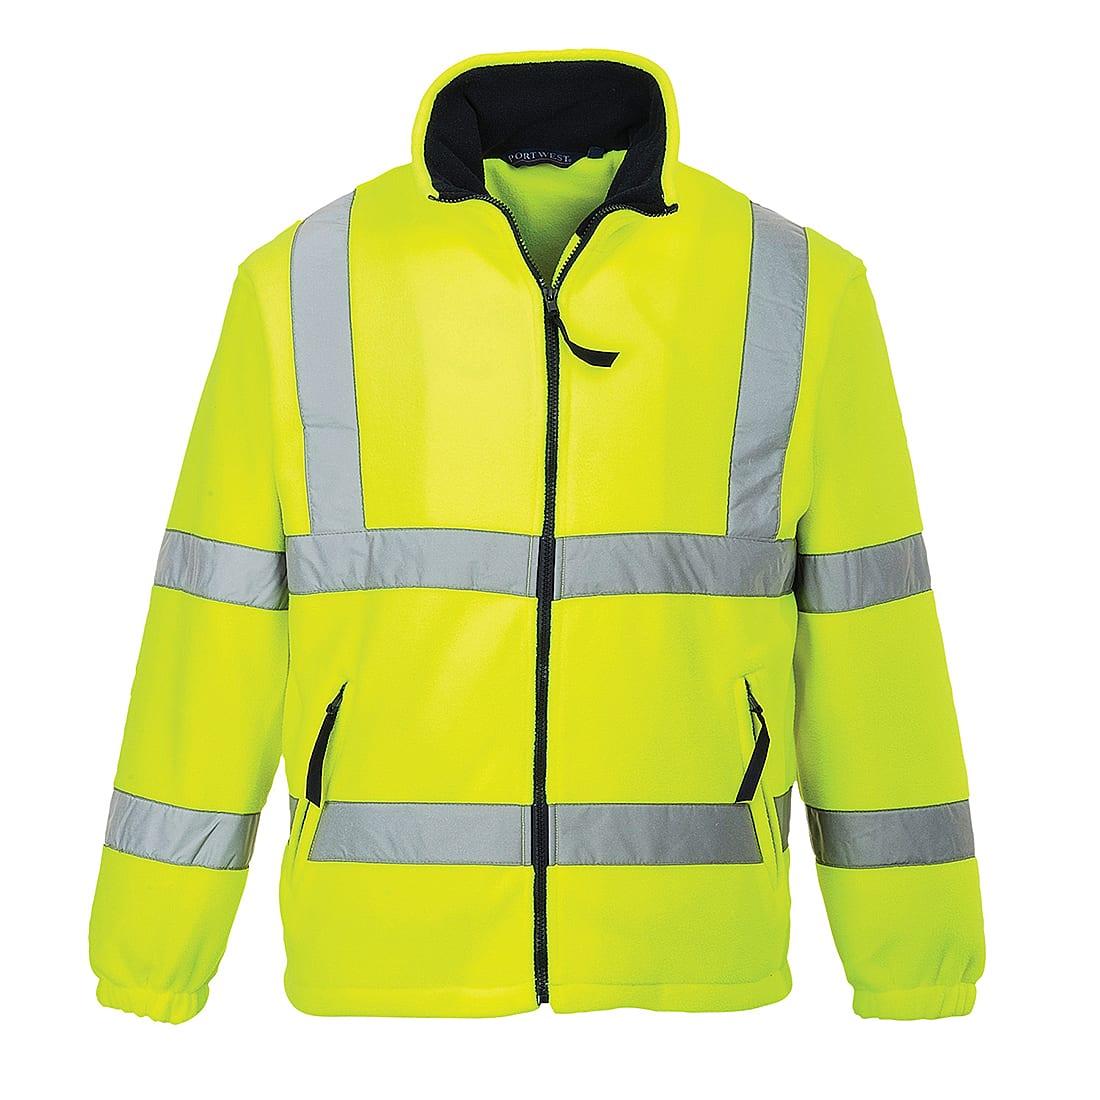 Portwest Hi-Viz Mesh Lined Fleece Jacket in Yellow (Product Code: F300)